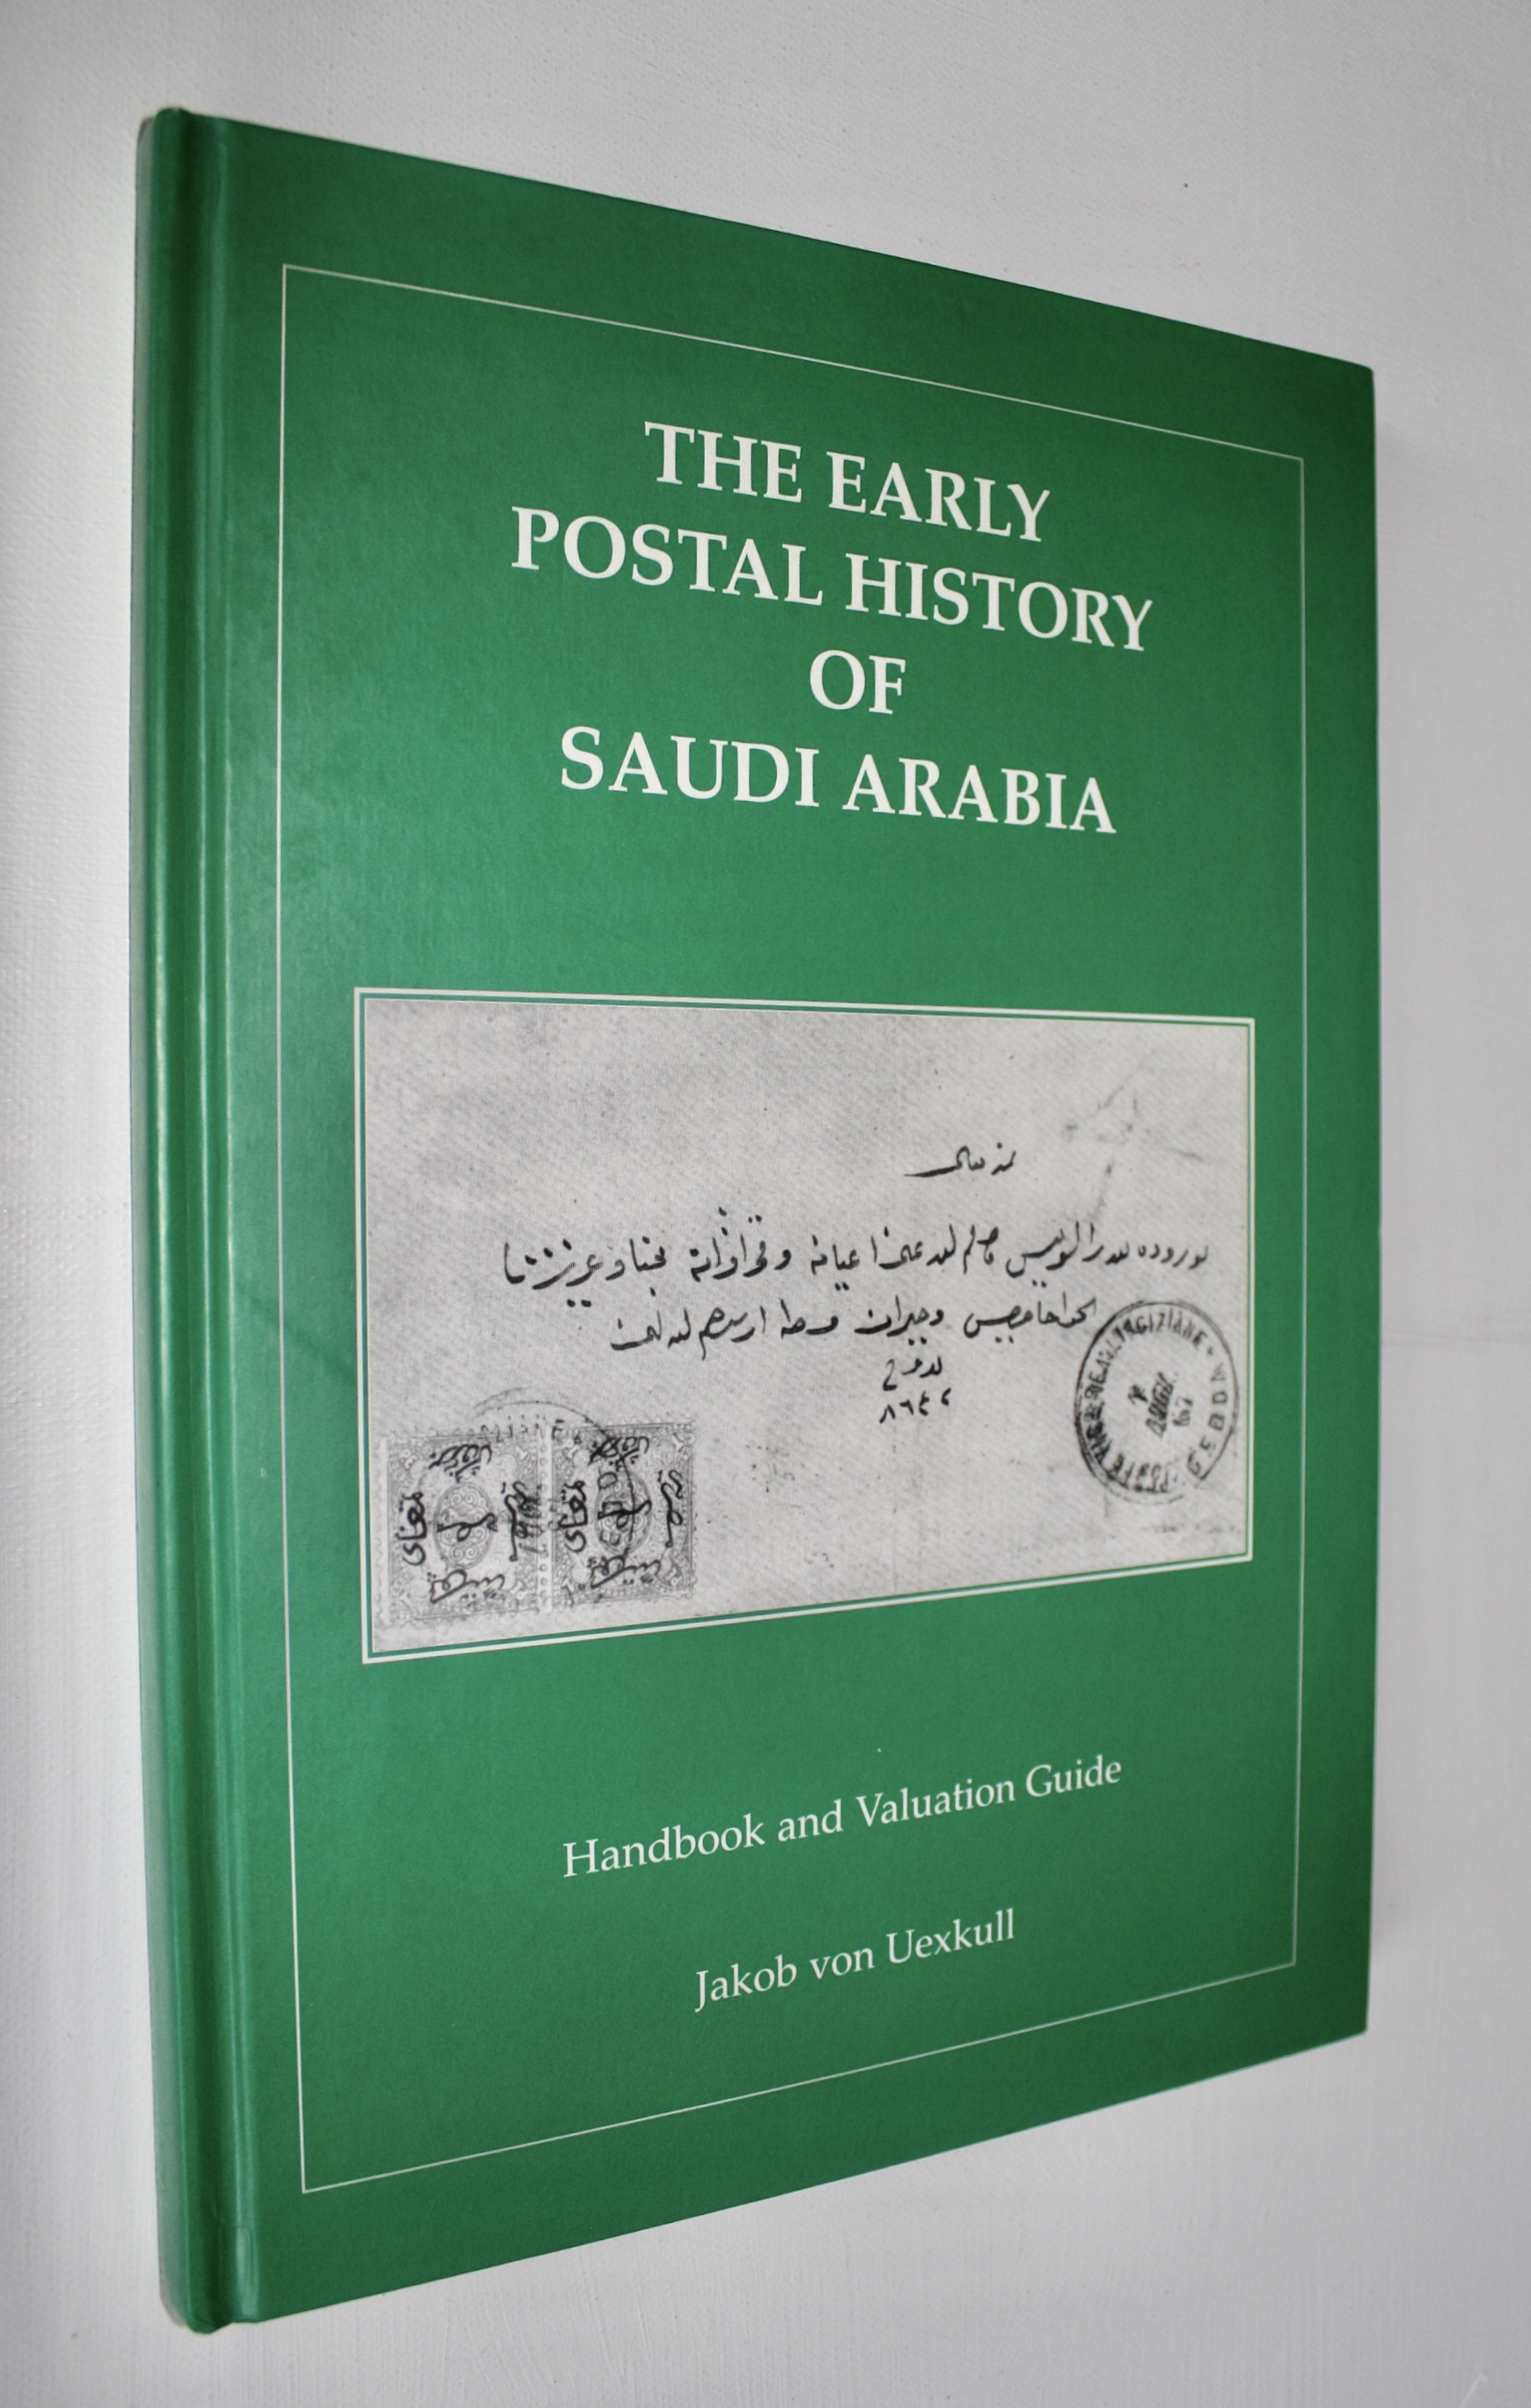 The Early Postal History of Saudi Arabia - Handbook and Valuation Guide - Uexkull, Jakob von